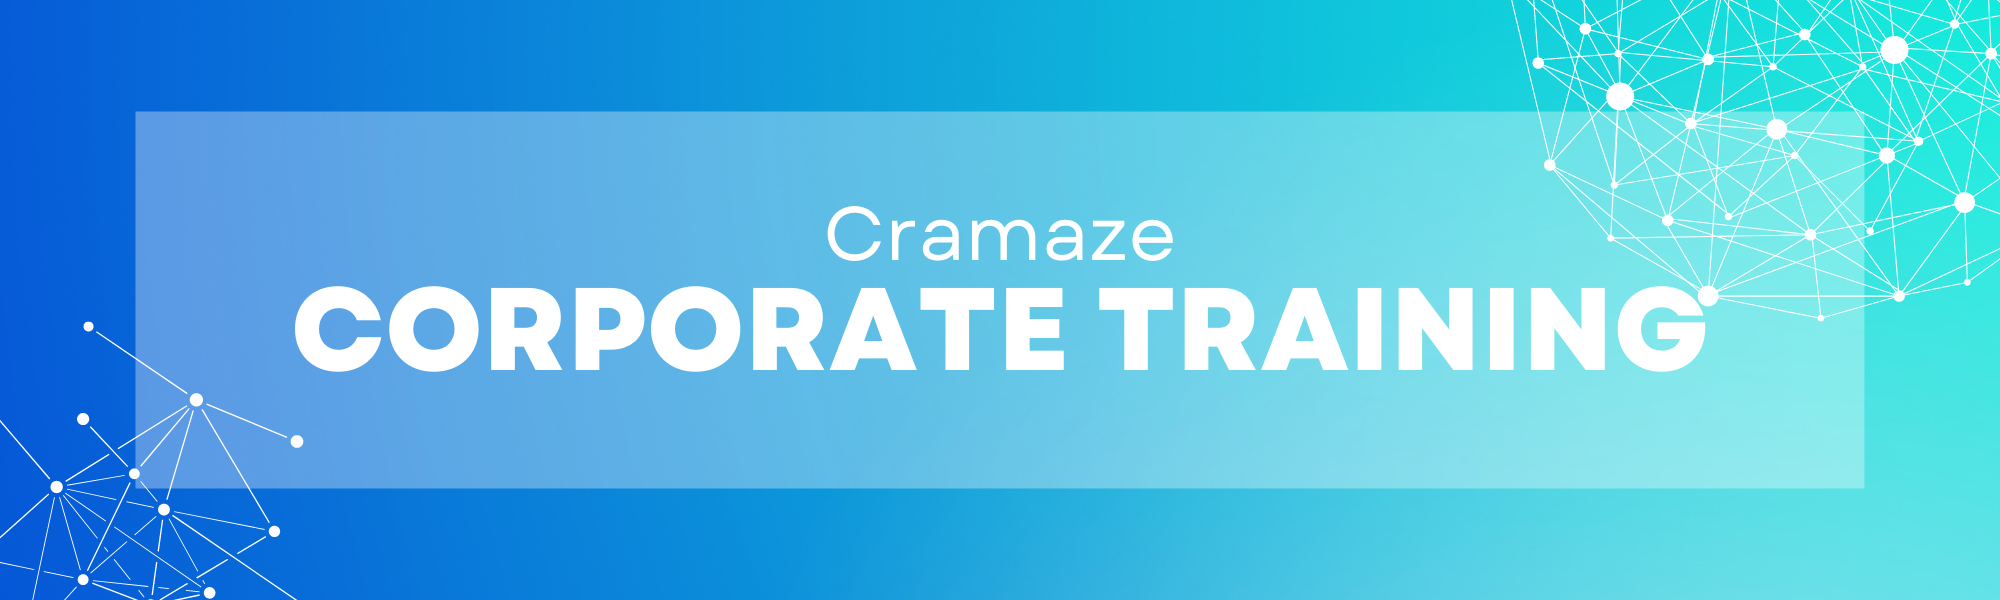 corporate training cramaze